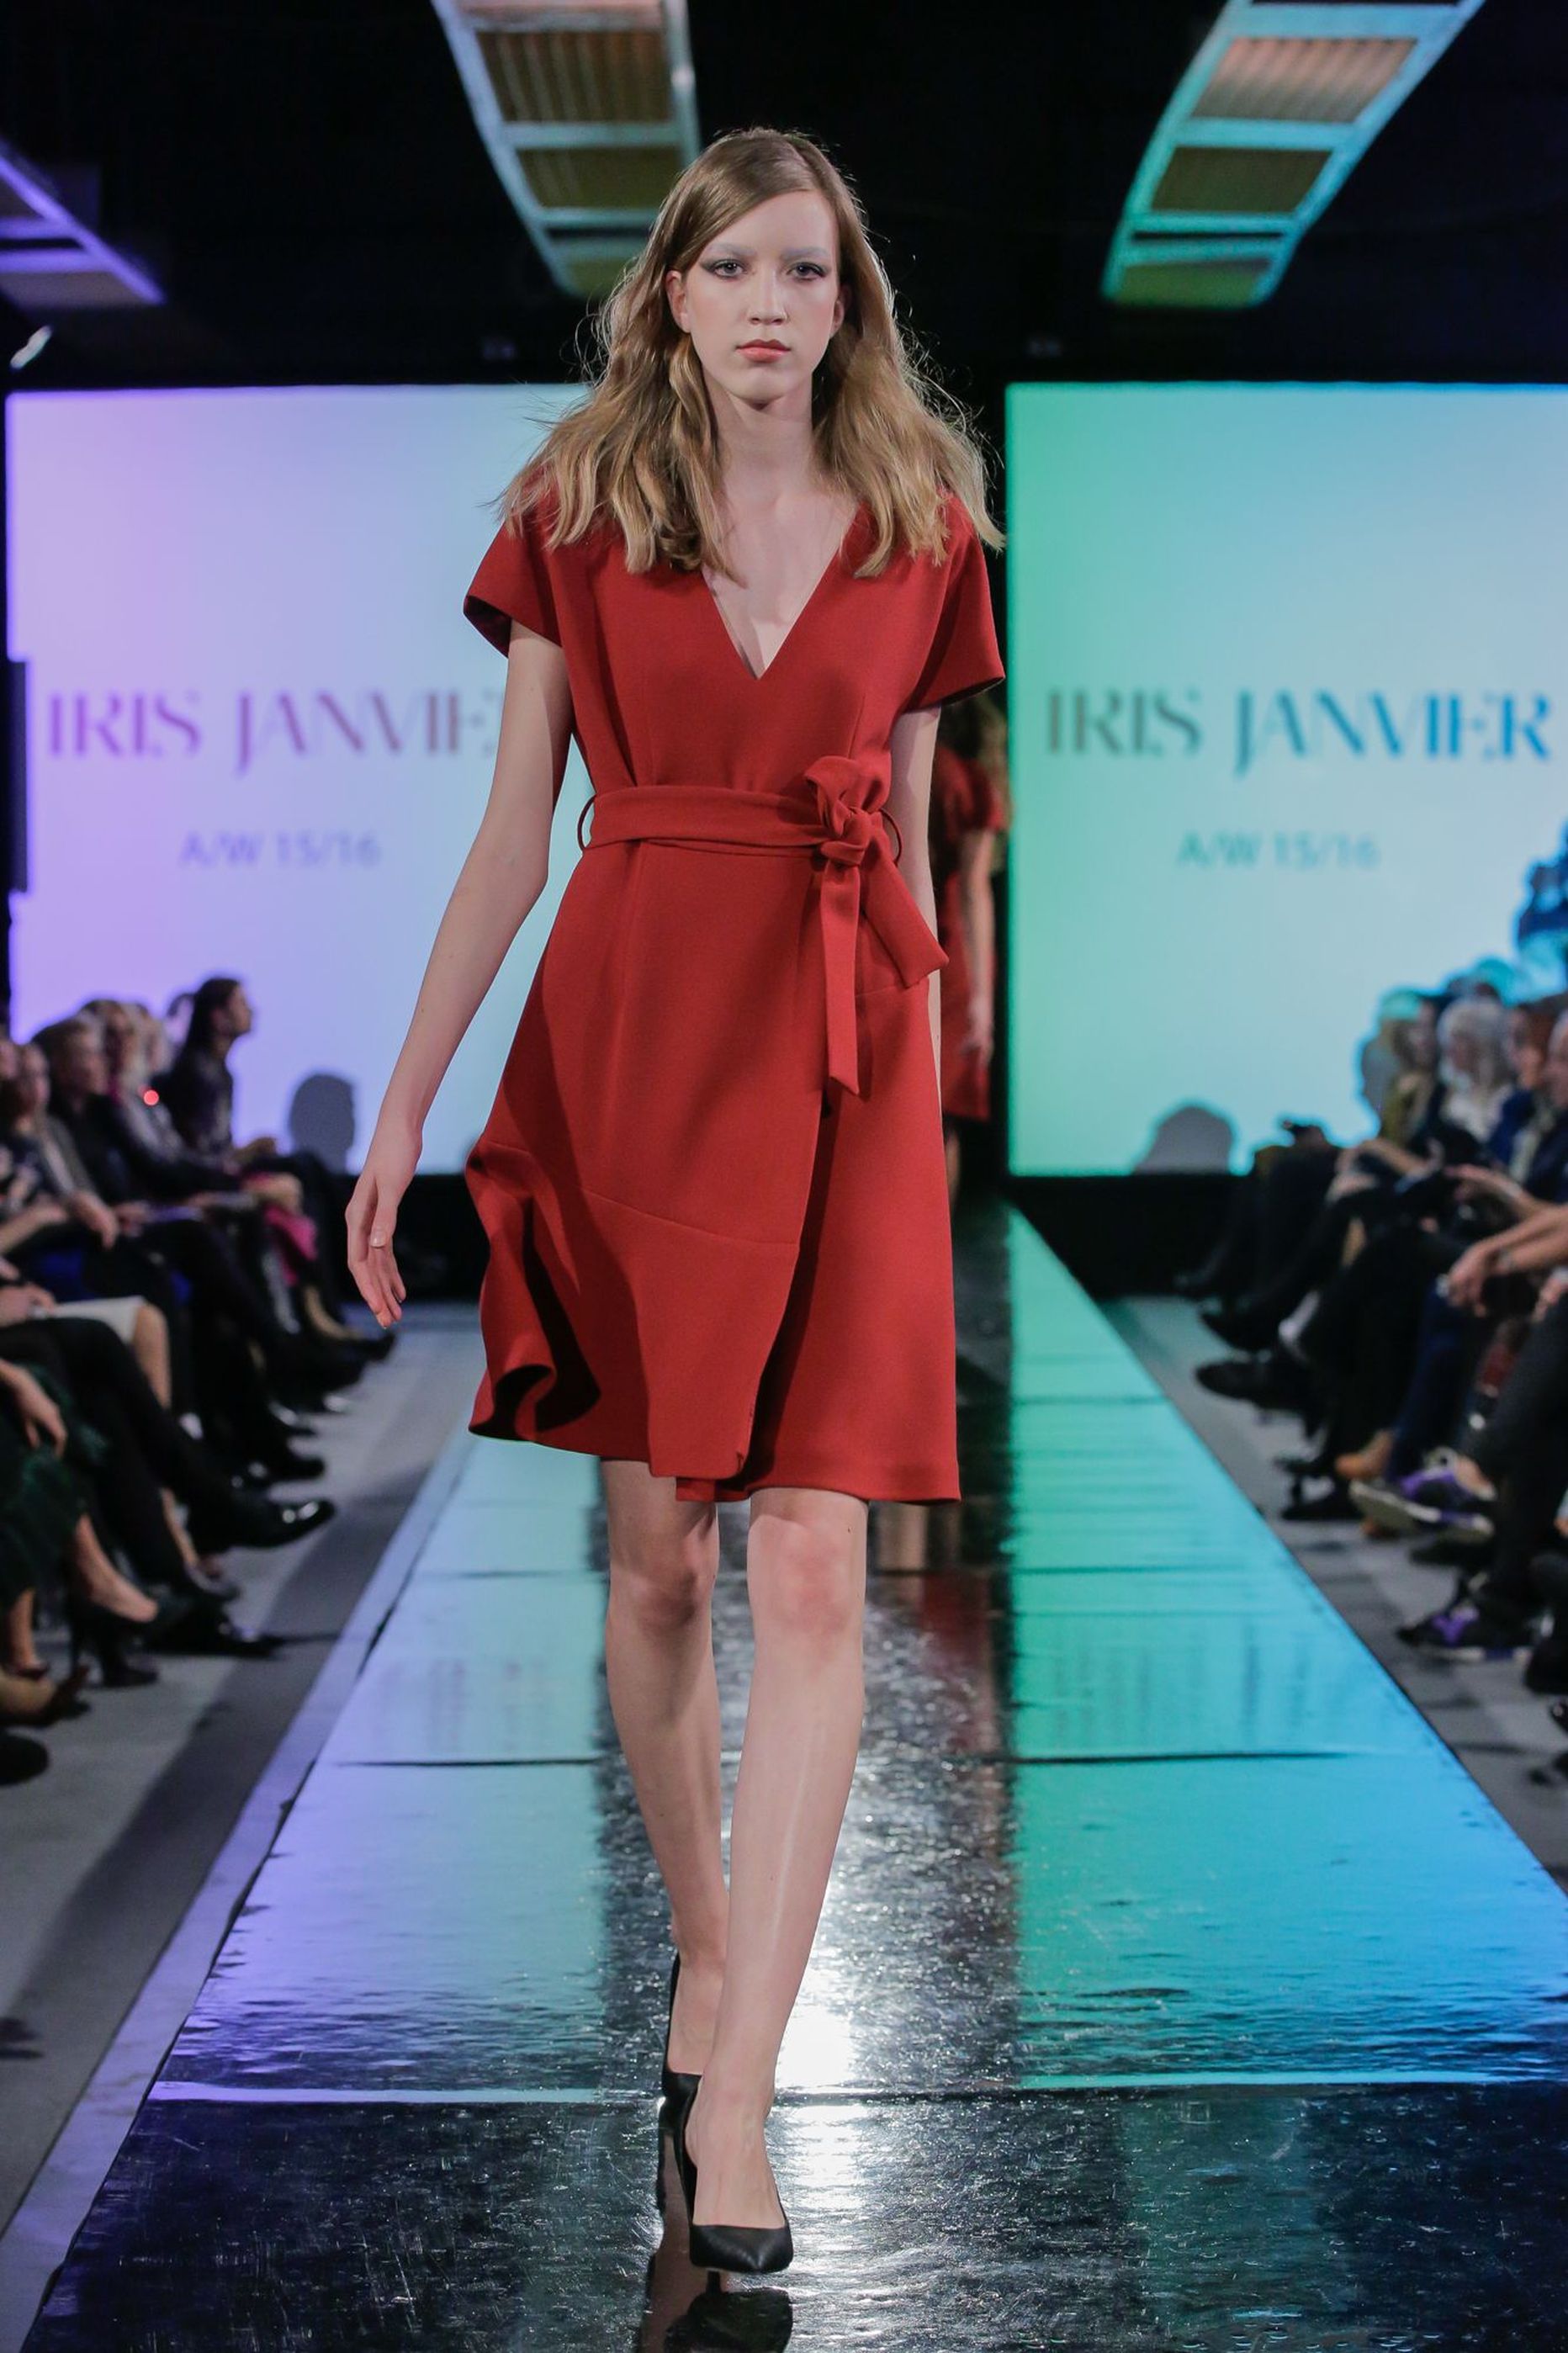 Iris Janvier  / TFW